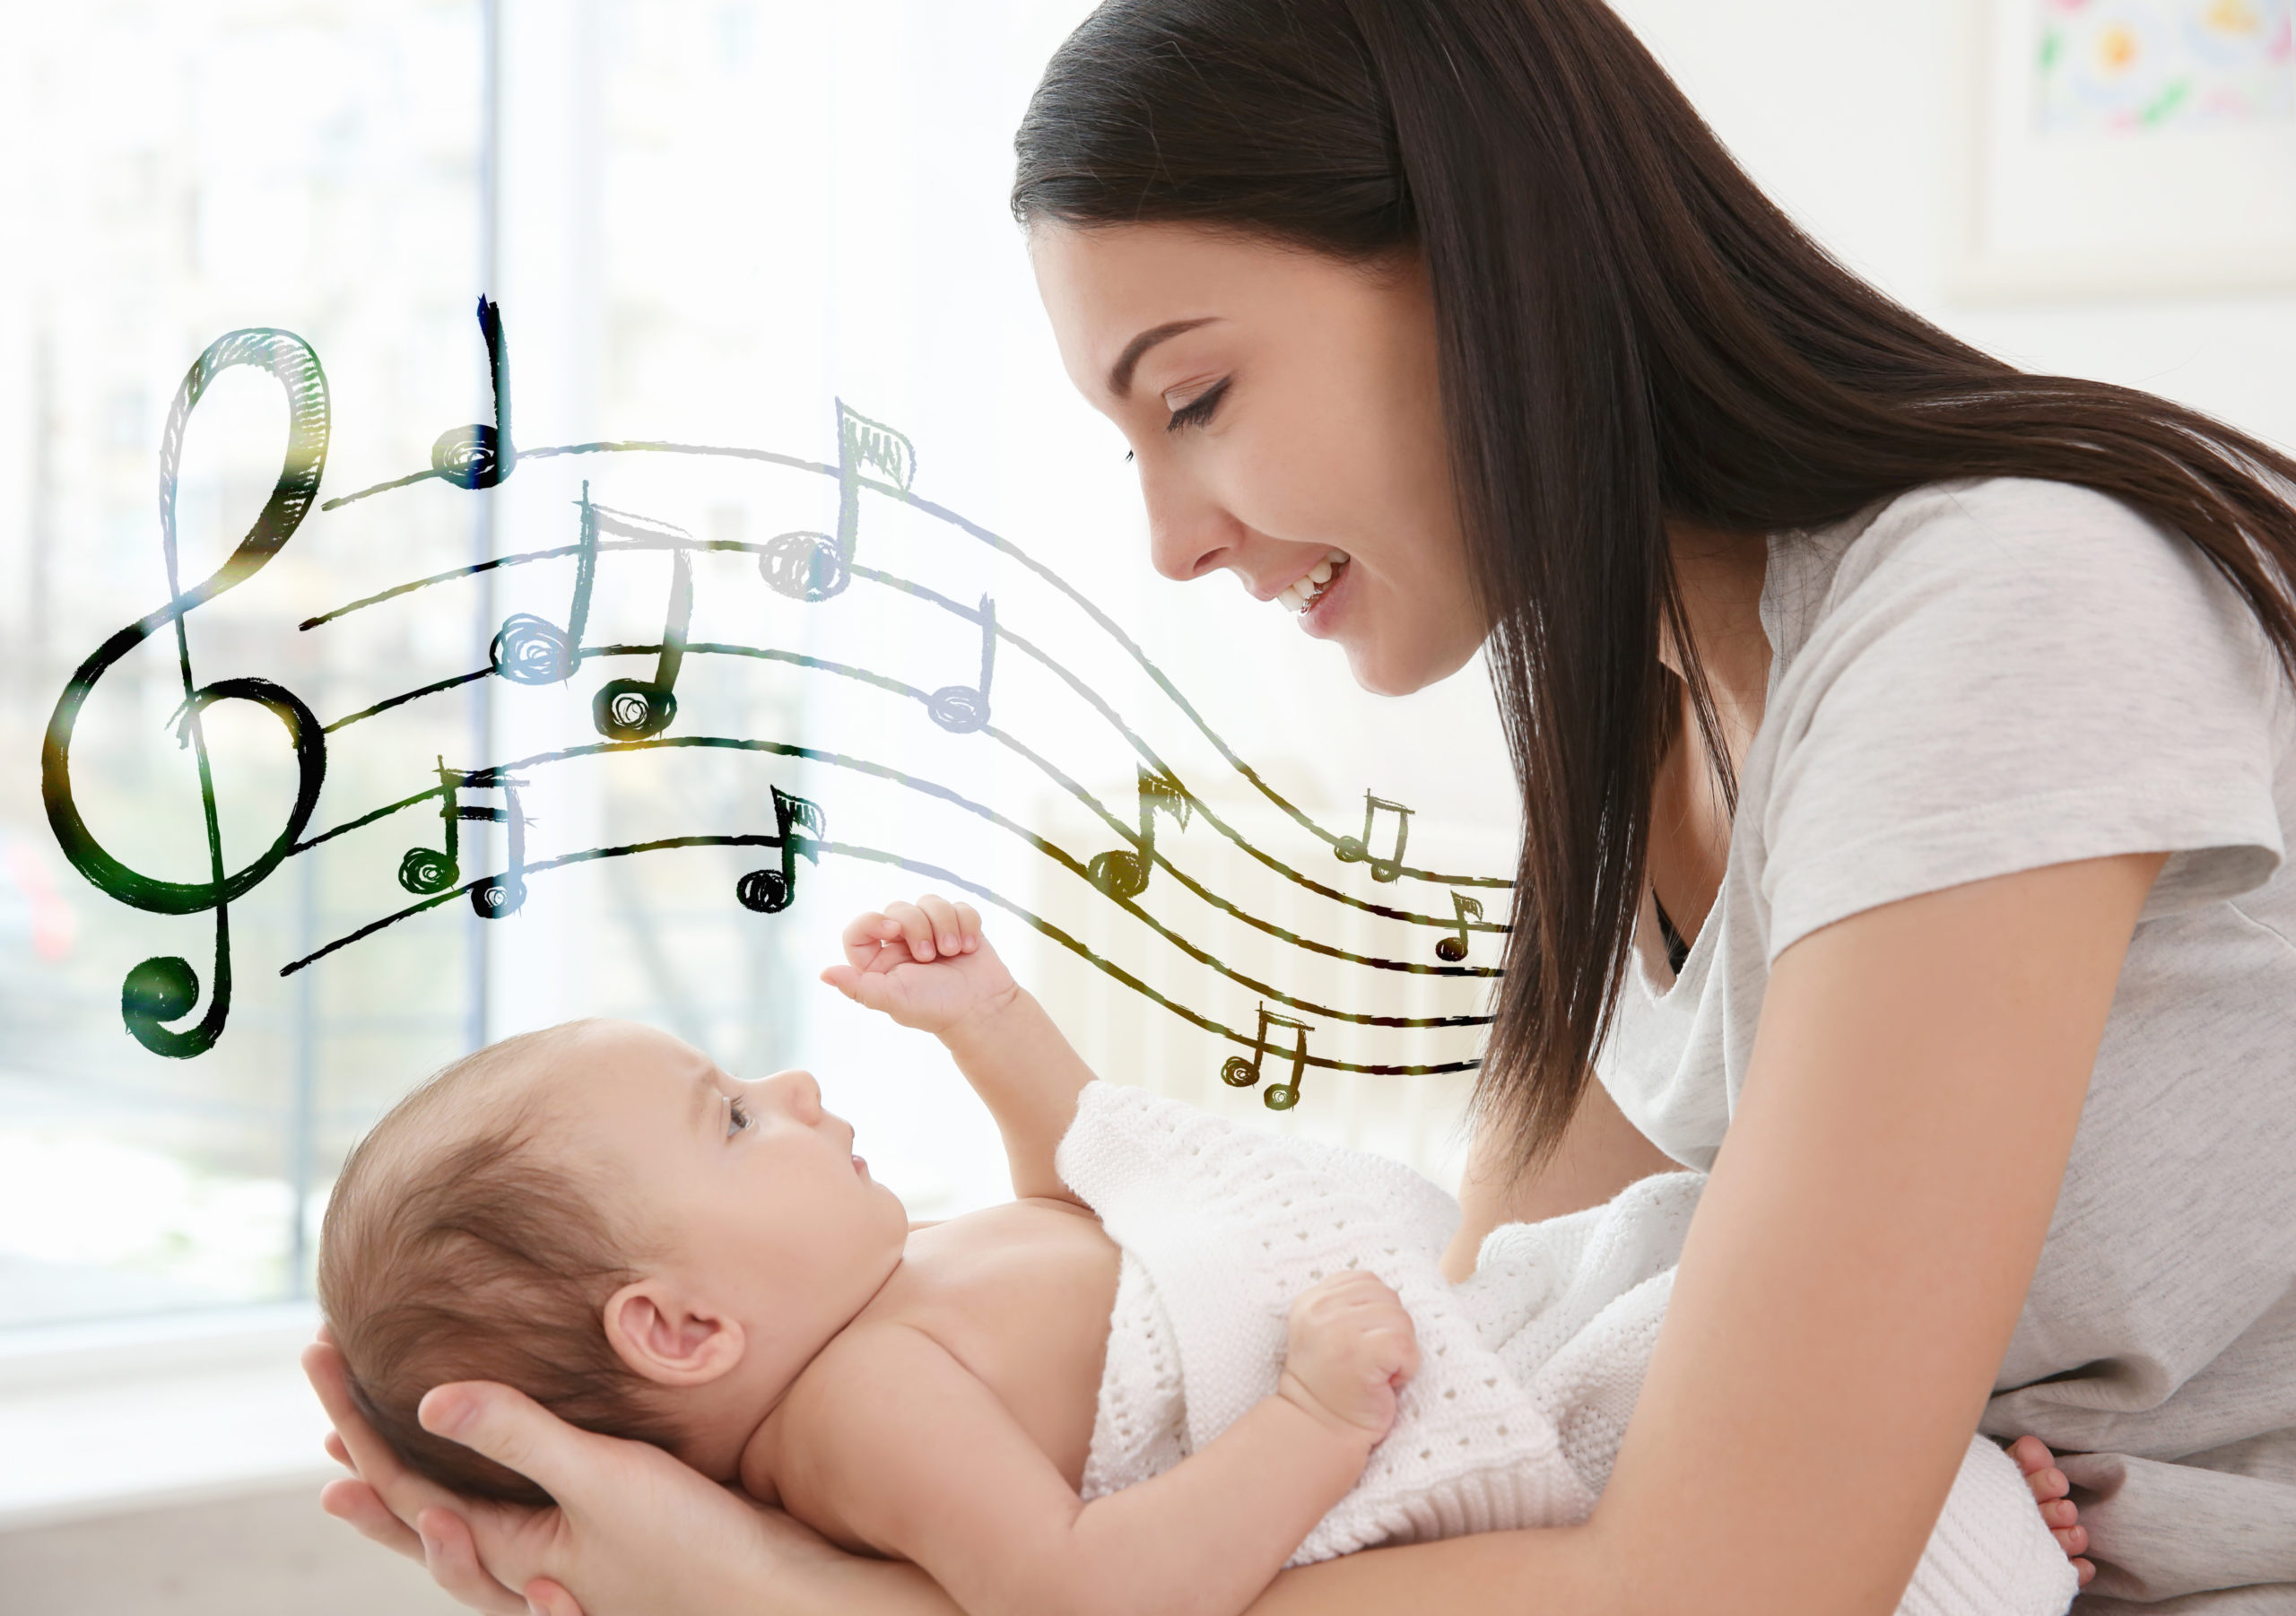 Музыка в жизни ребенка. Мама поет ребенку. Мама поет колыбельную. Мама поет колыбельную ребенку. Мать с ребенком.